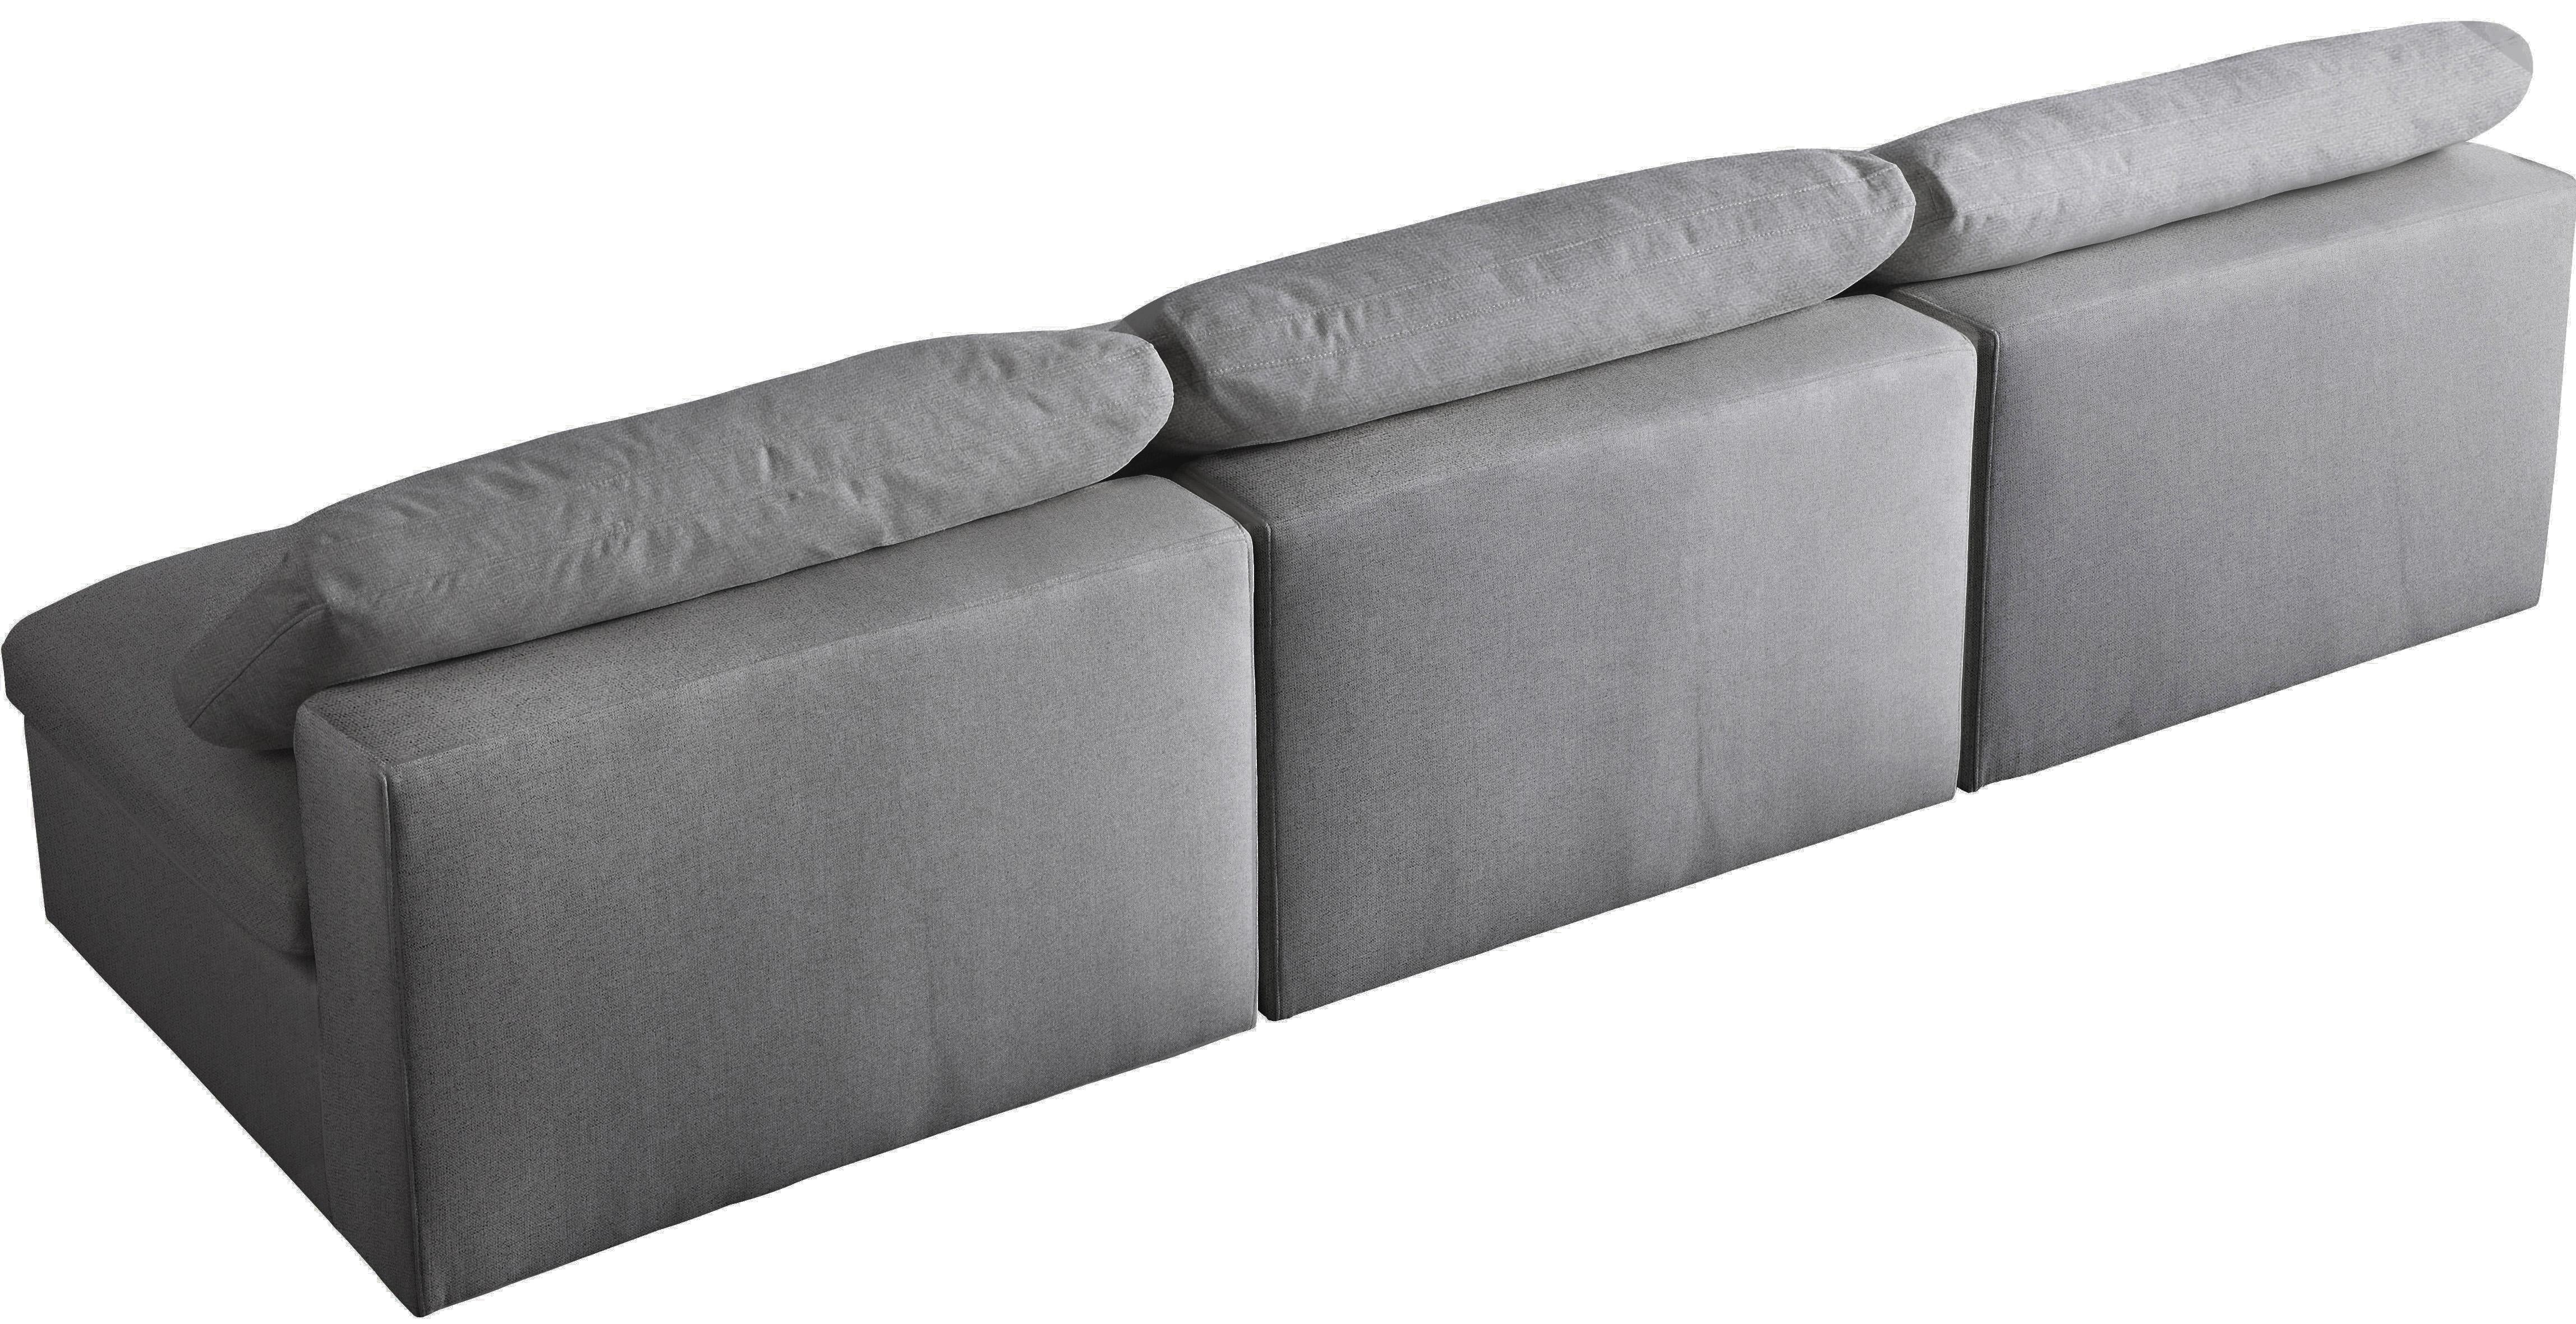 Serene Grey Linen Fabric Deluxe Cloud Modular Armless Sofa